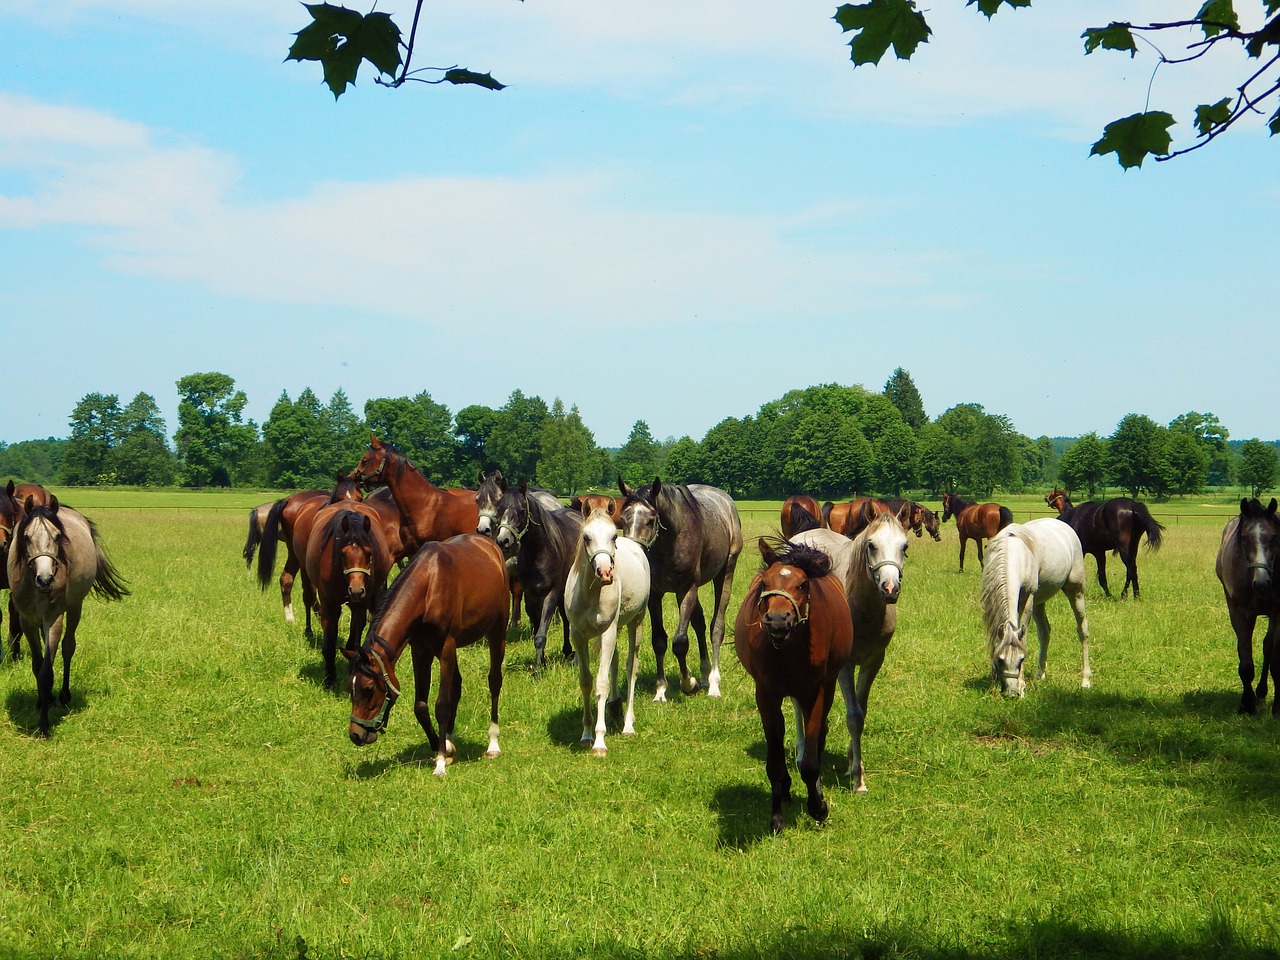 janow podlaski horse stocks free photo